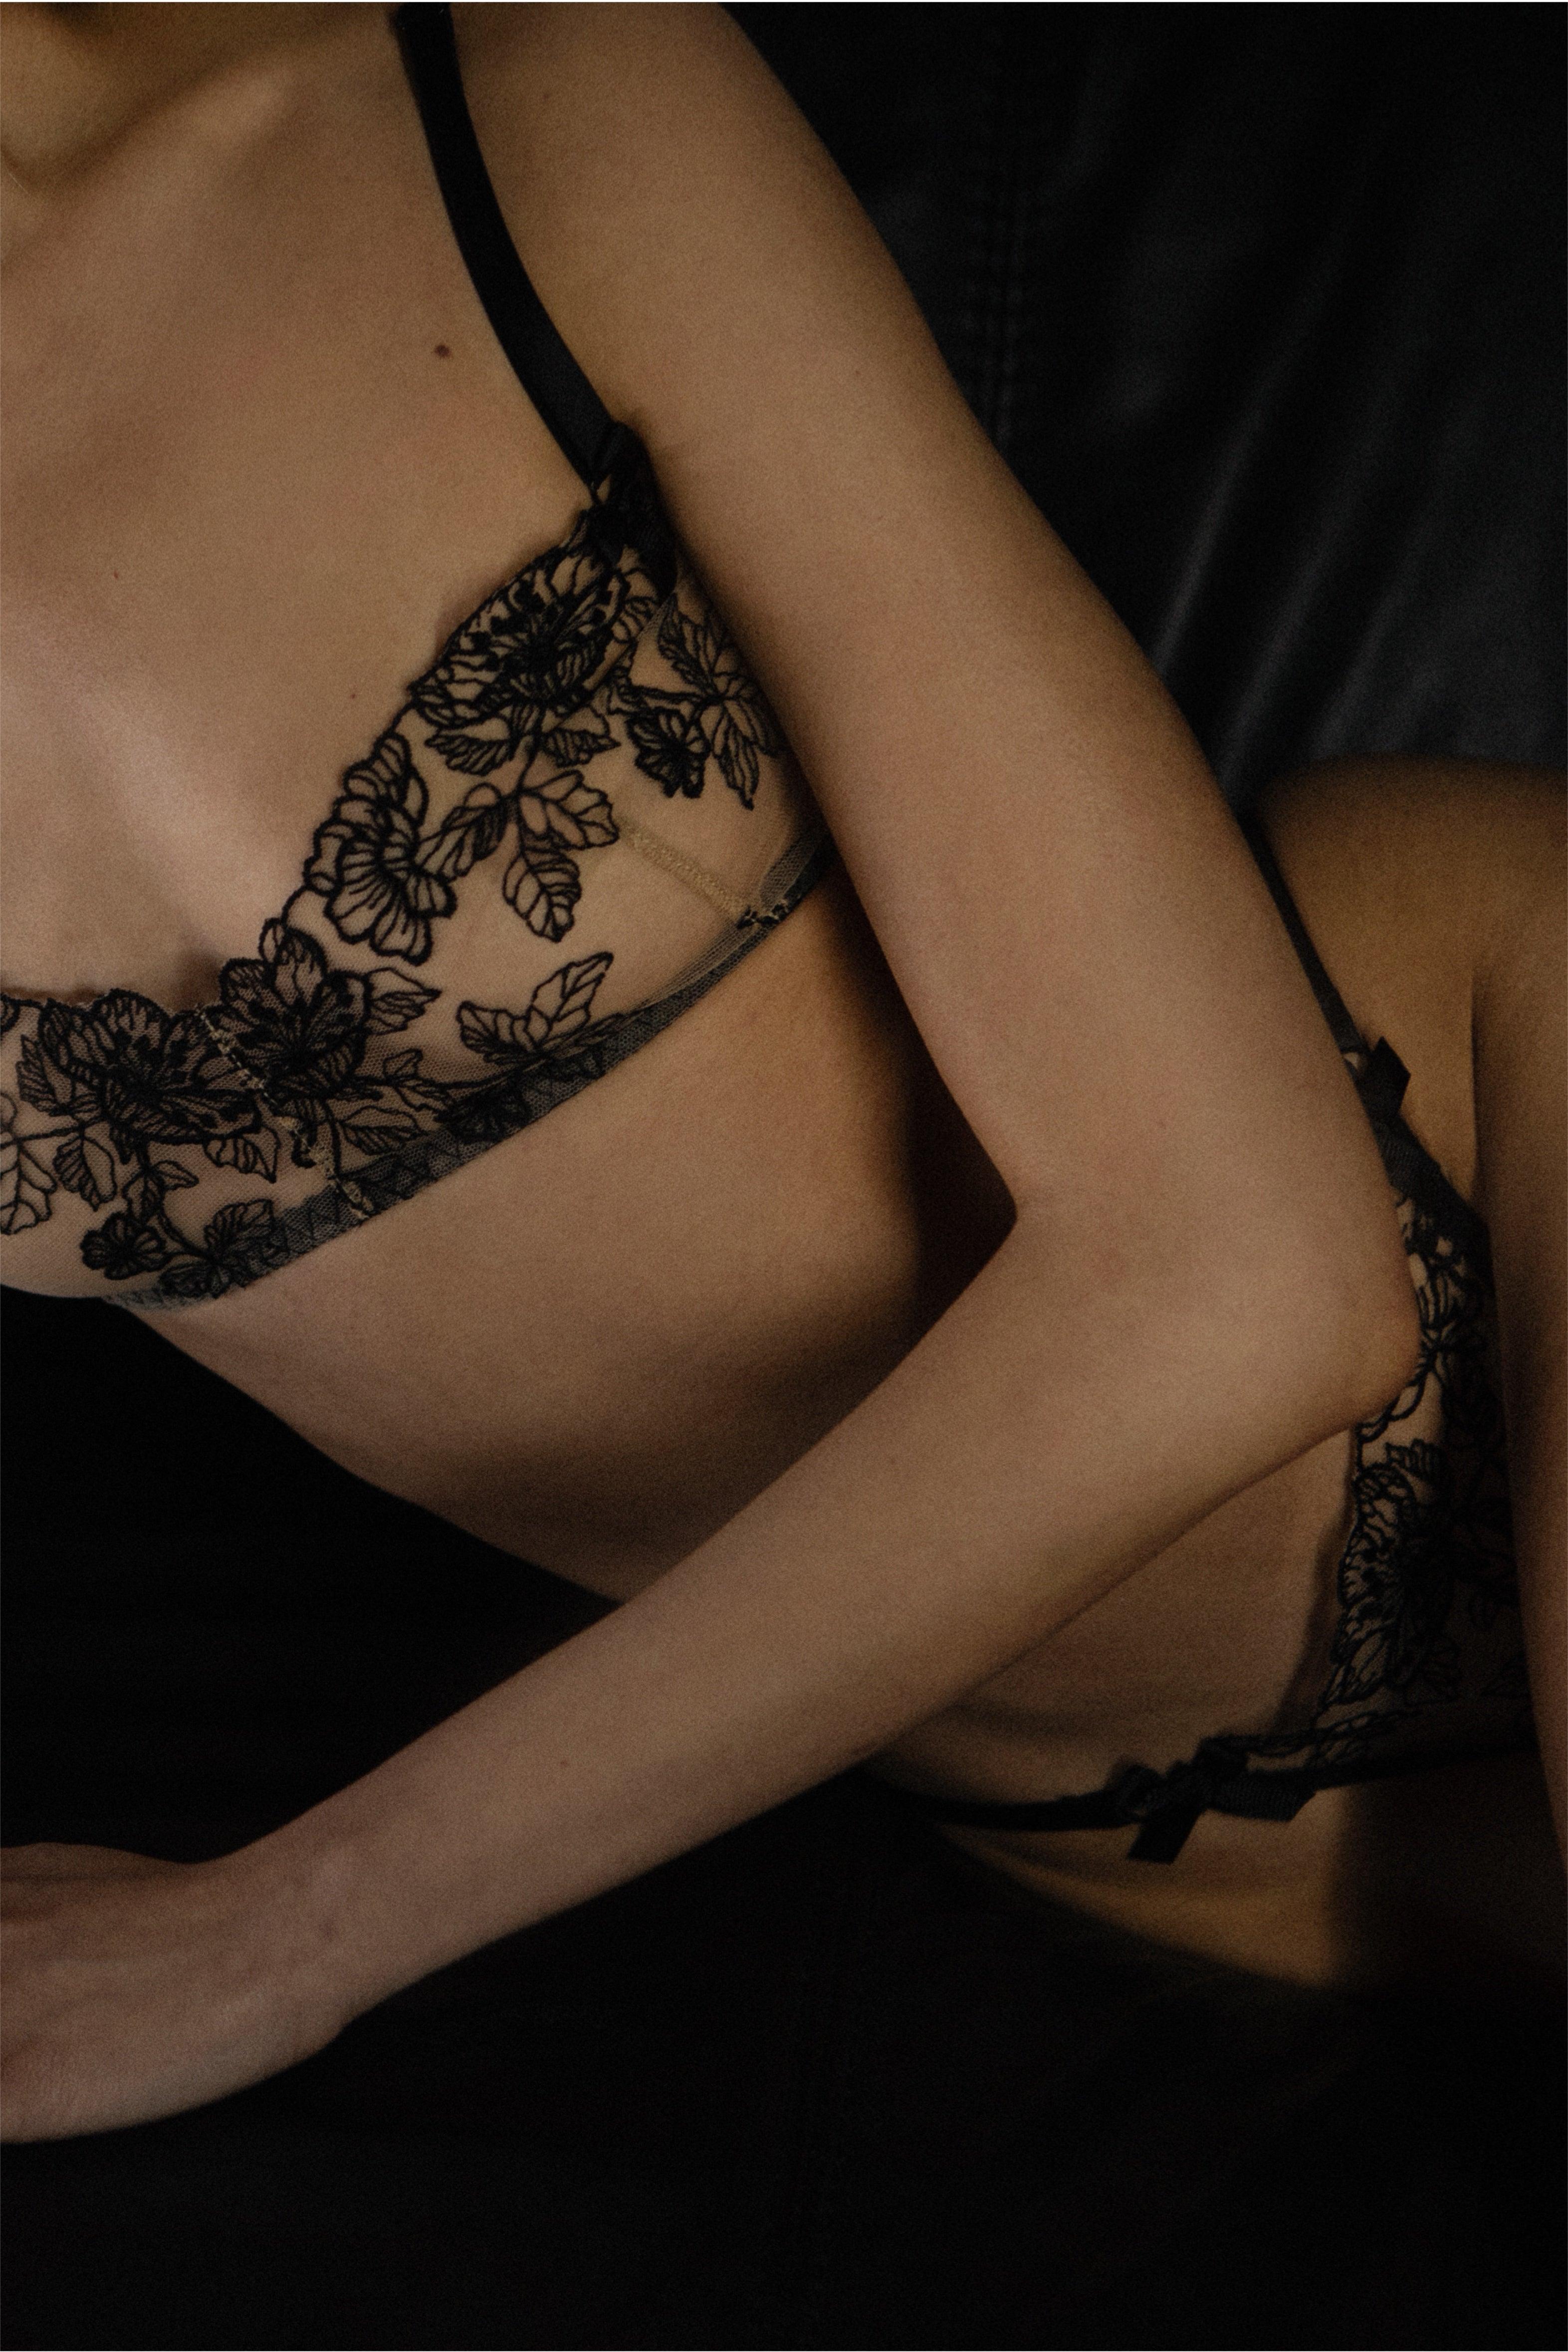 Barbara nude black lace bra - yesUndress